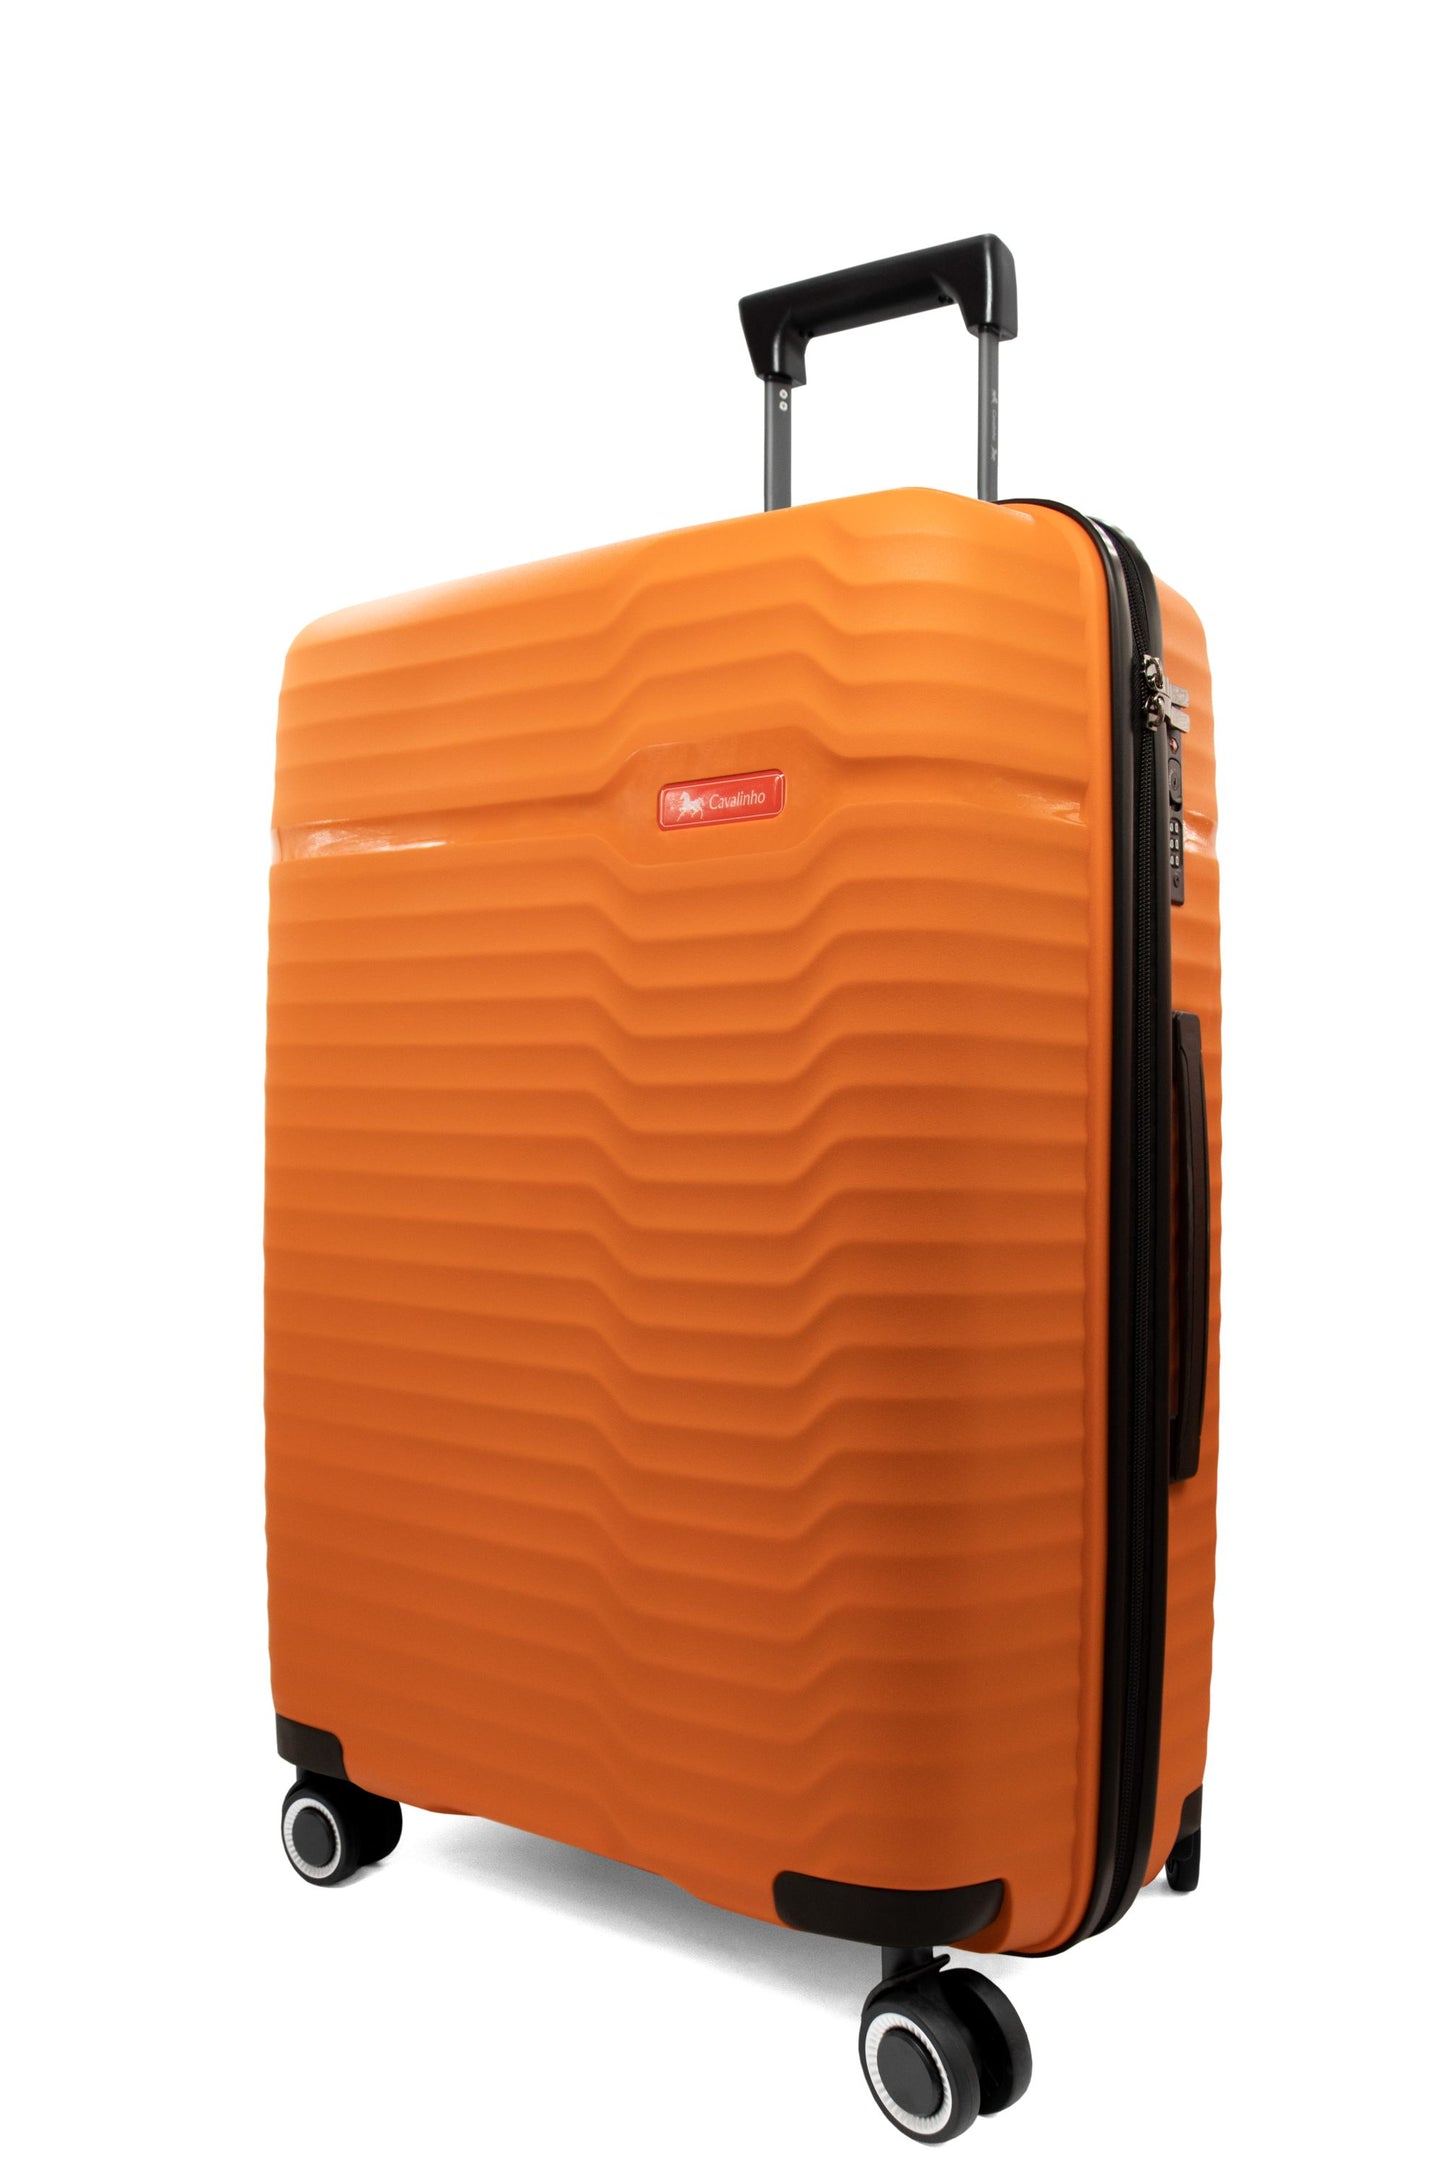 Cavalinho Check-in Hardside Luggage (24" or 28") - 24 inch DarkOrange - 68010003.37.24_2